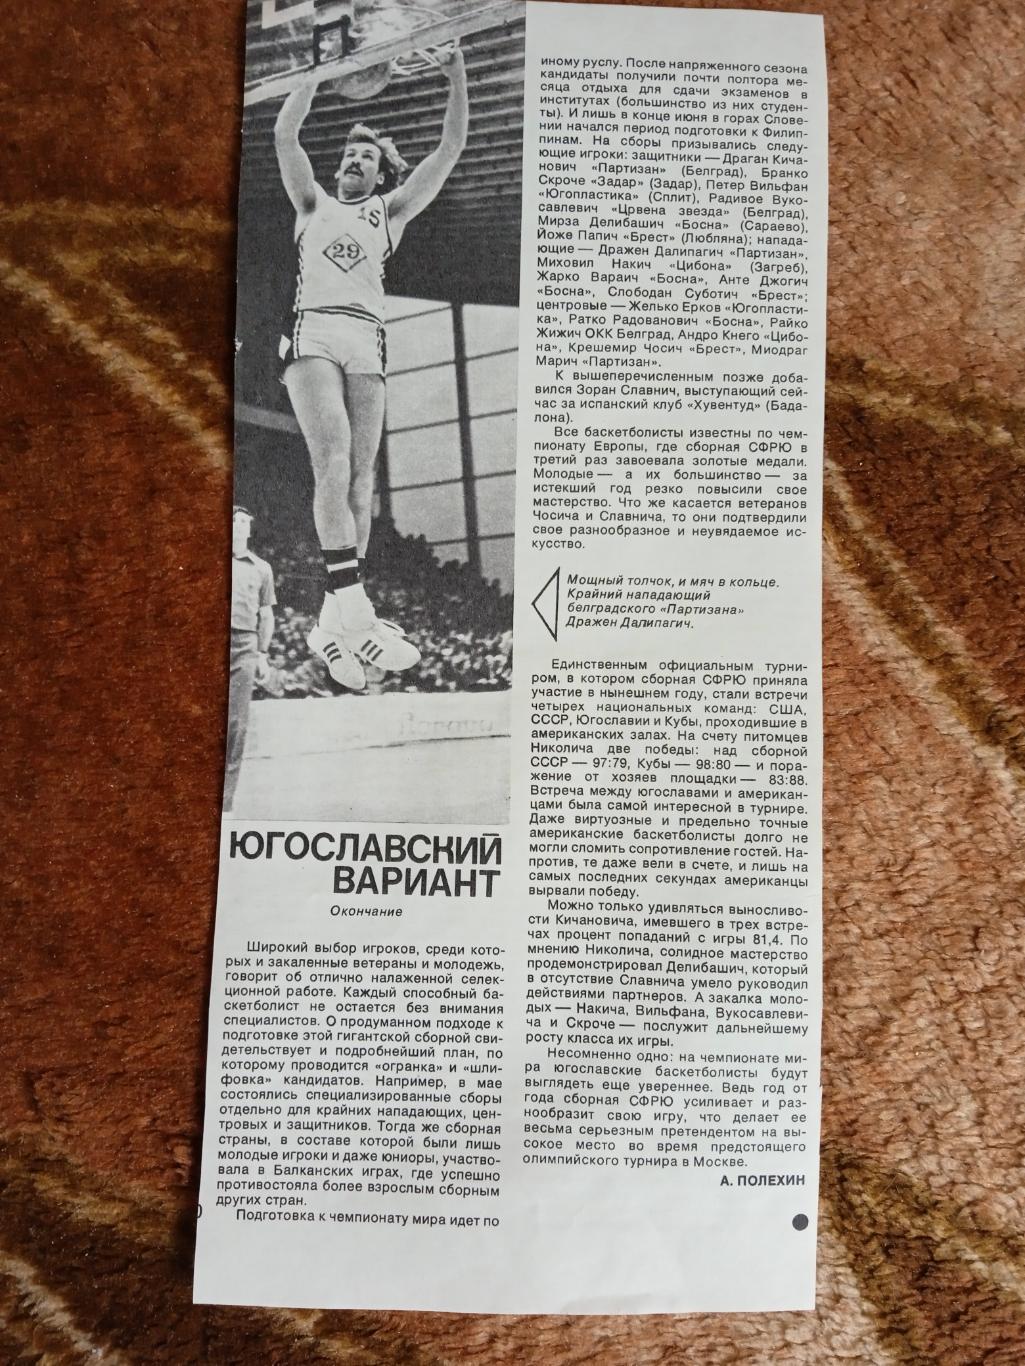 Статья.Фото.Баскетбол.Югославский вариант.Журнал СИ 1978. 1